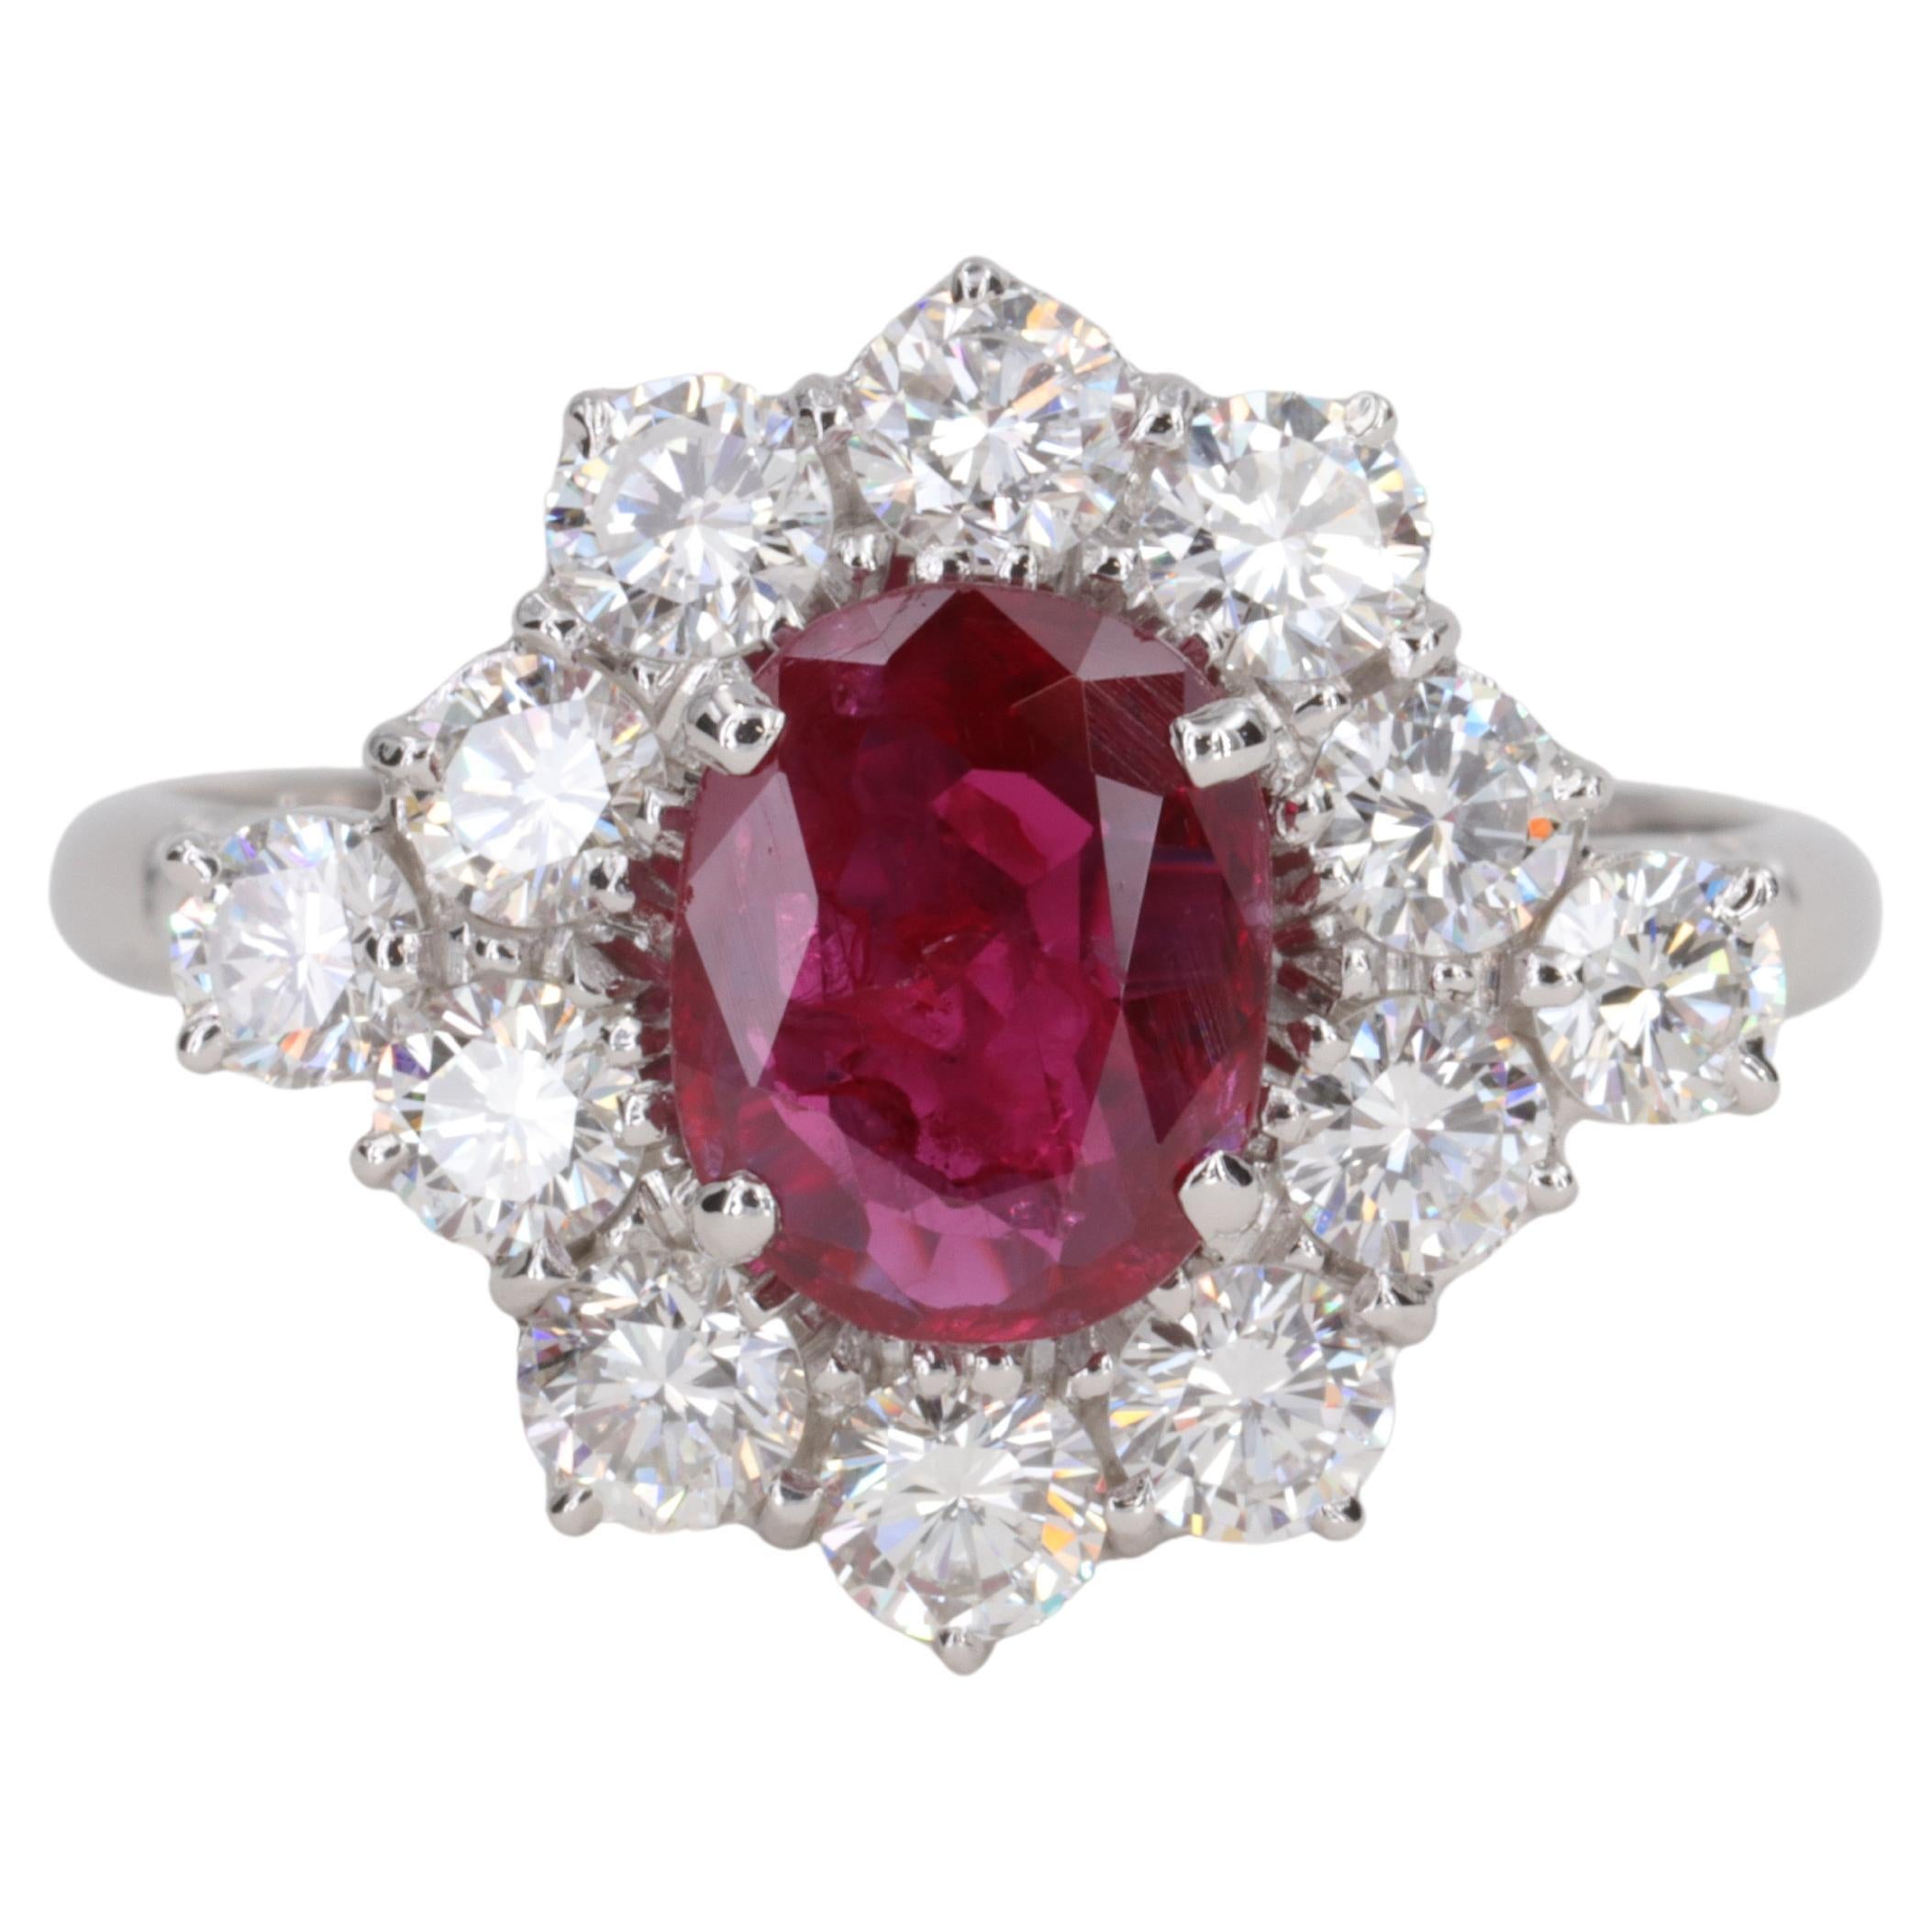 G.I.A. Vivid Red Ruby and Diamond Halo Handmade Ring